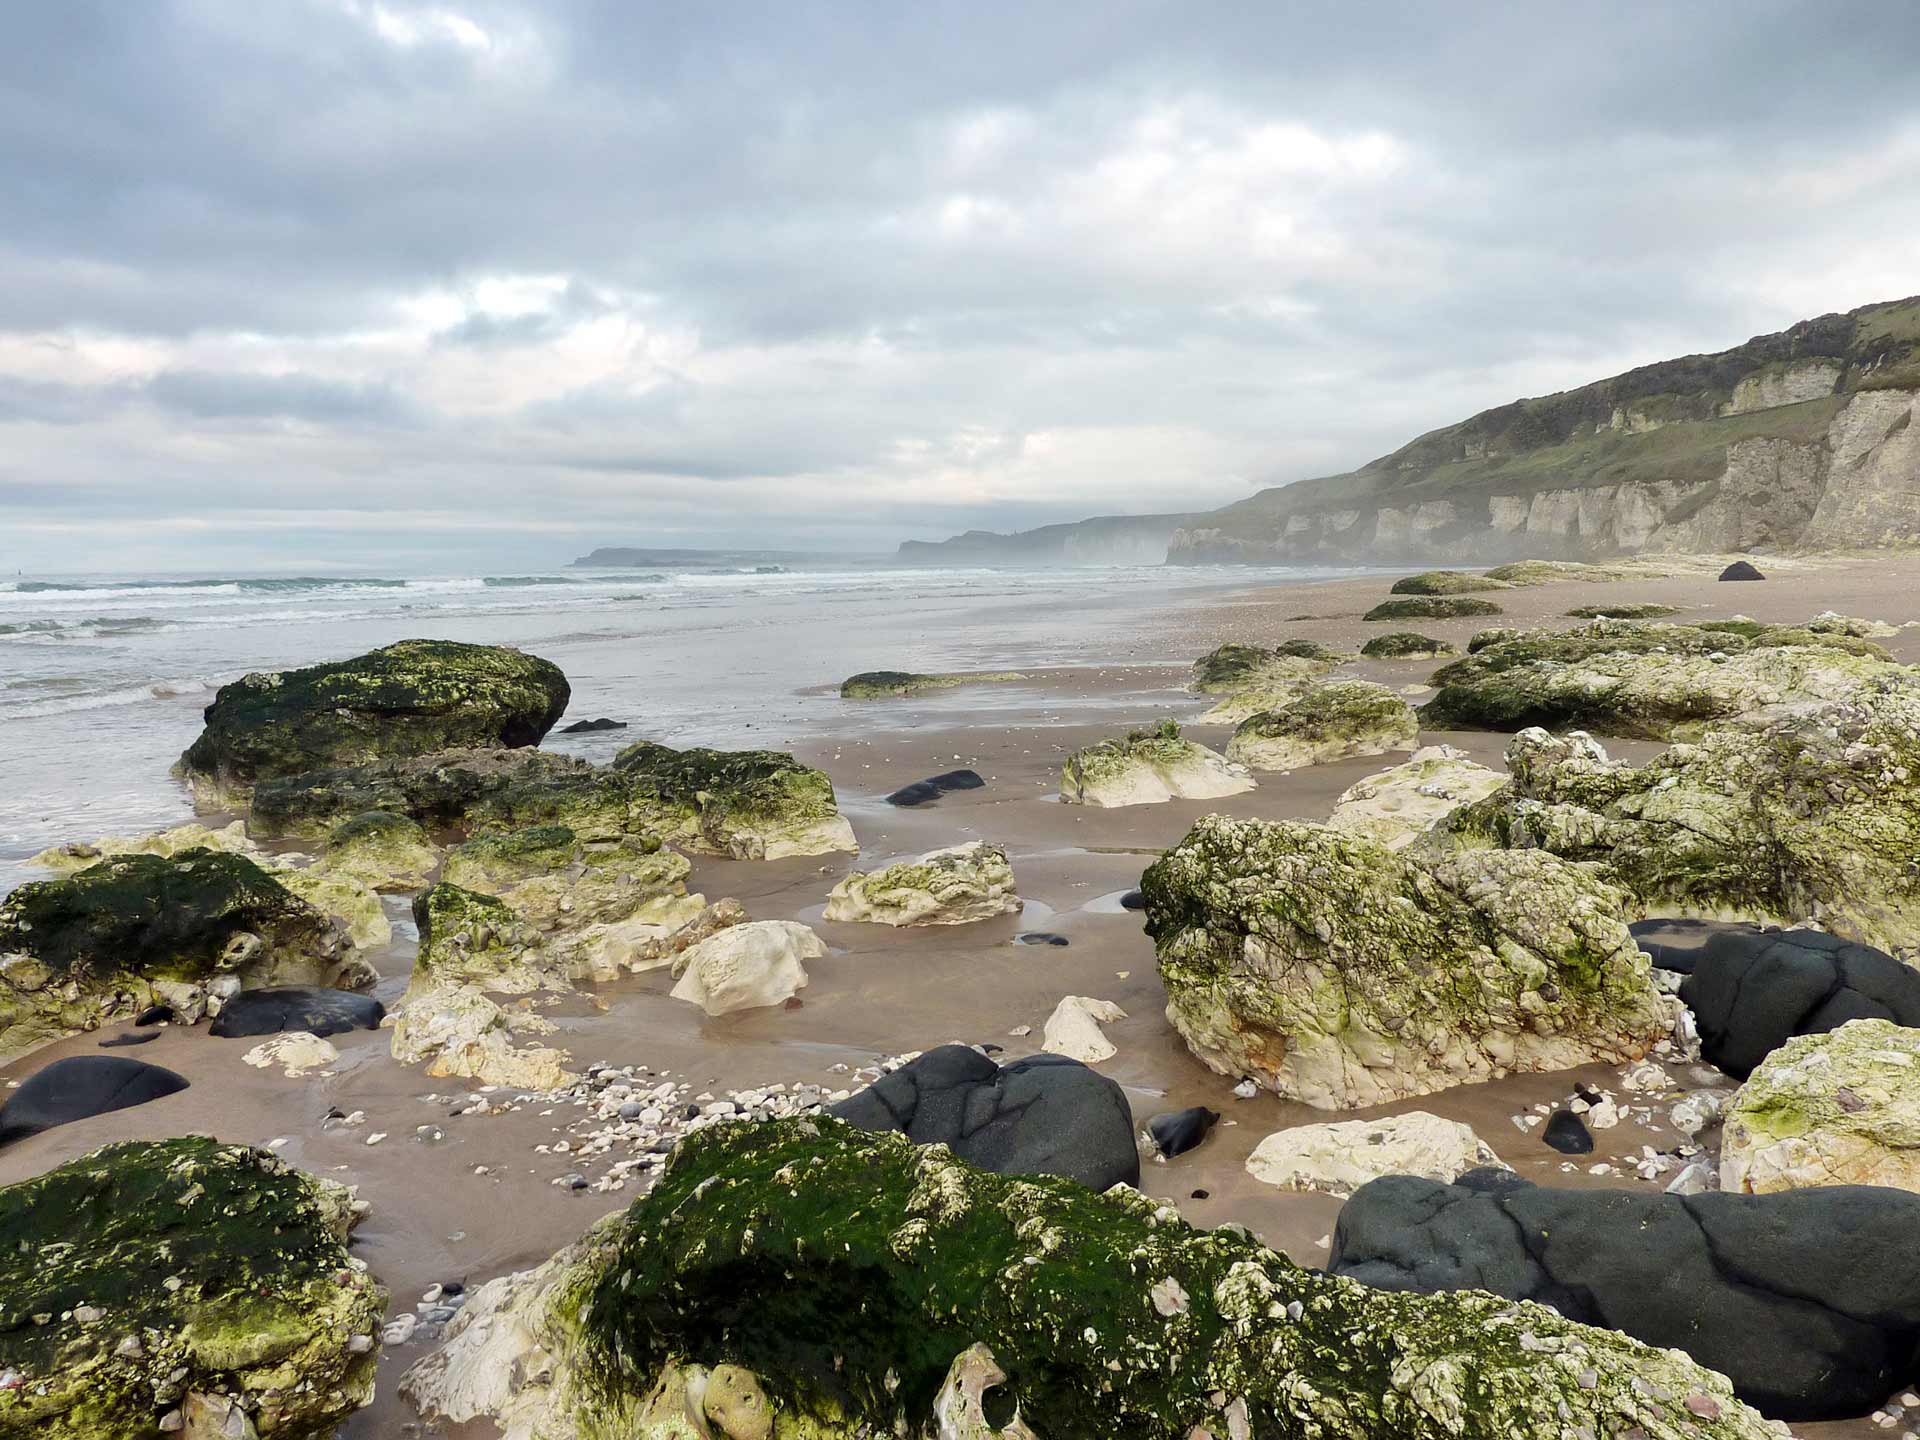 "White Rocks Beach" by photographer Catherine McManus